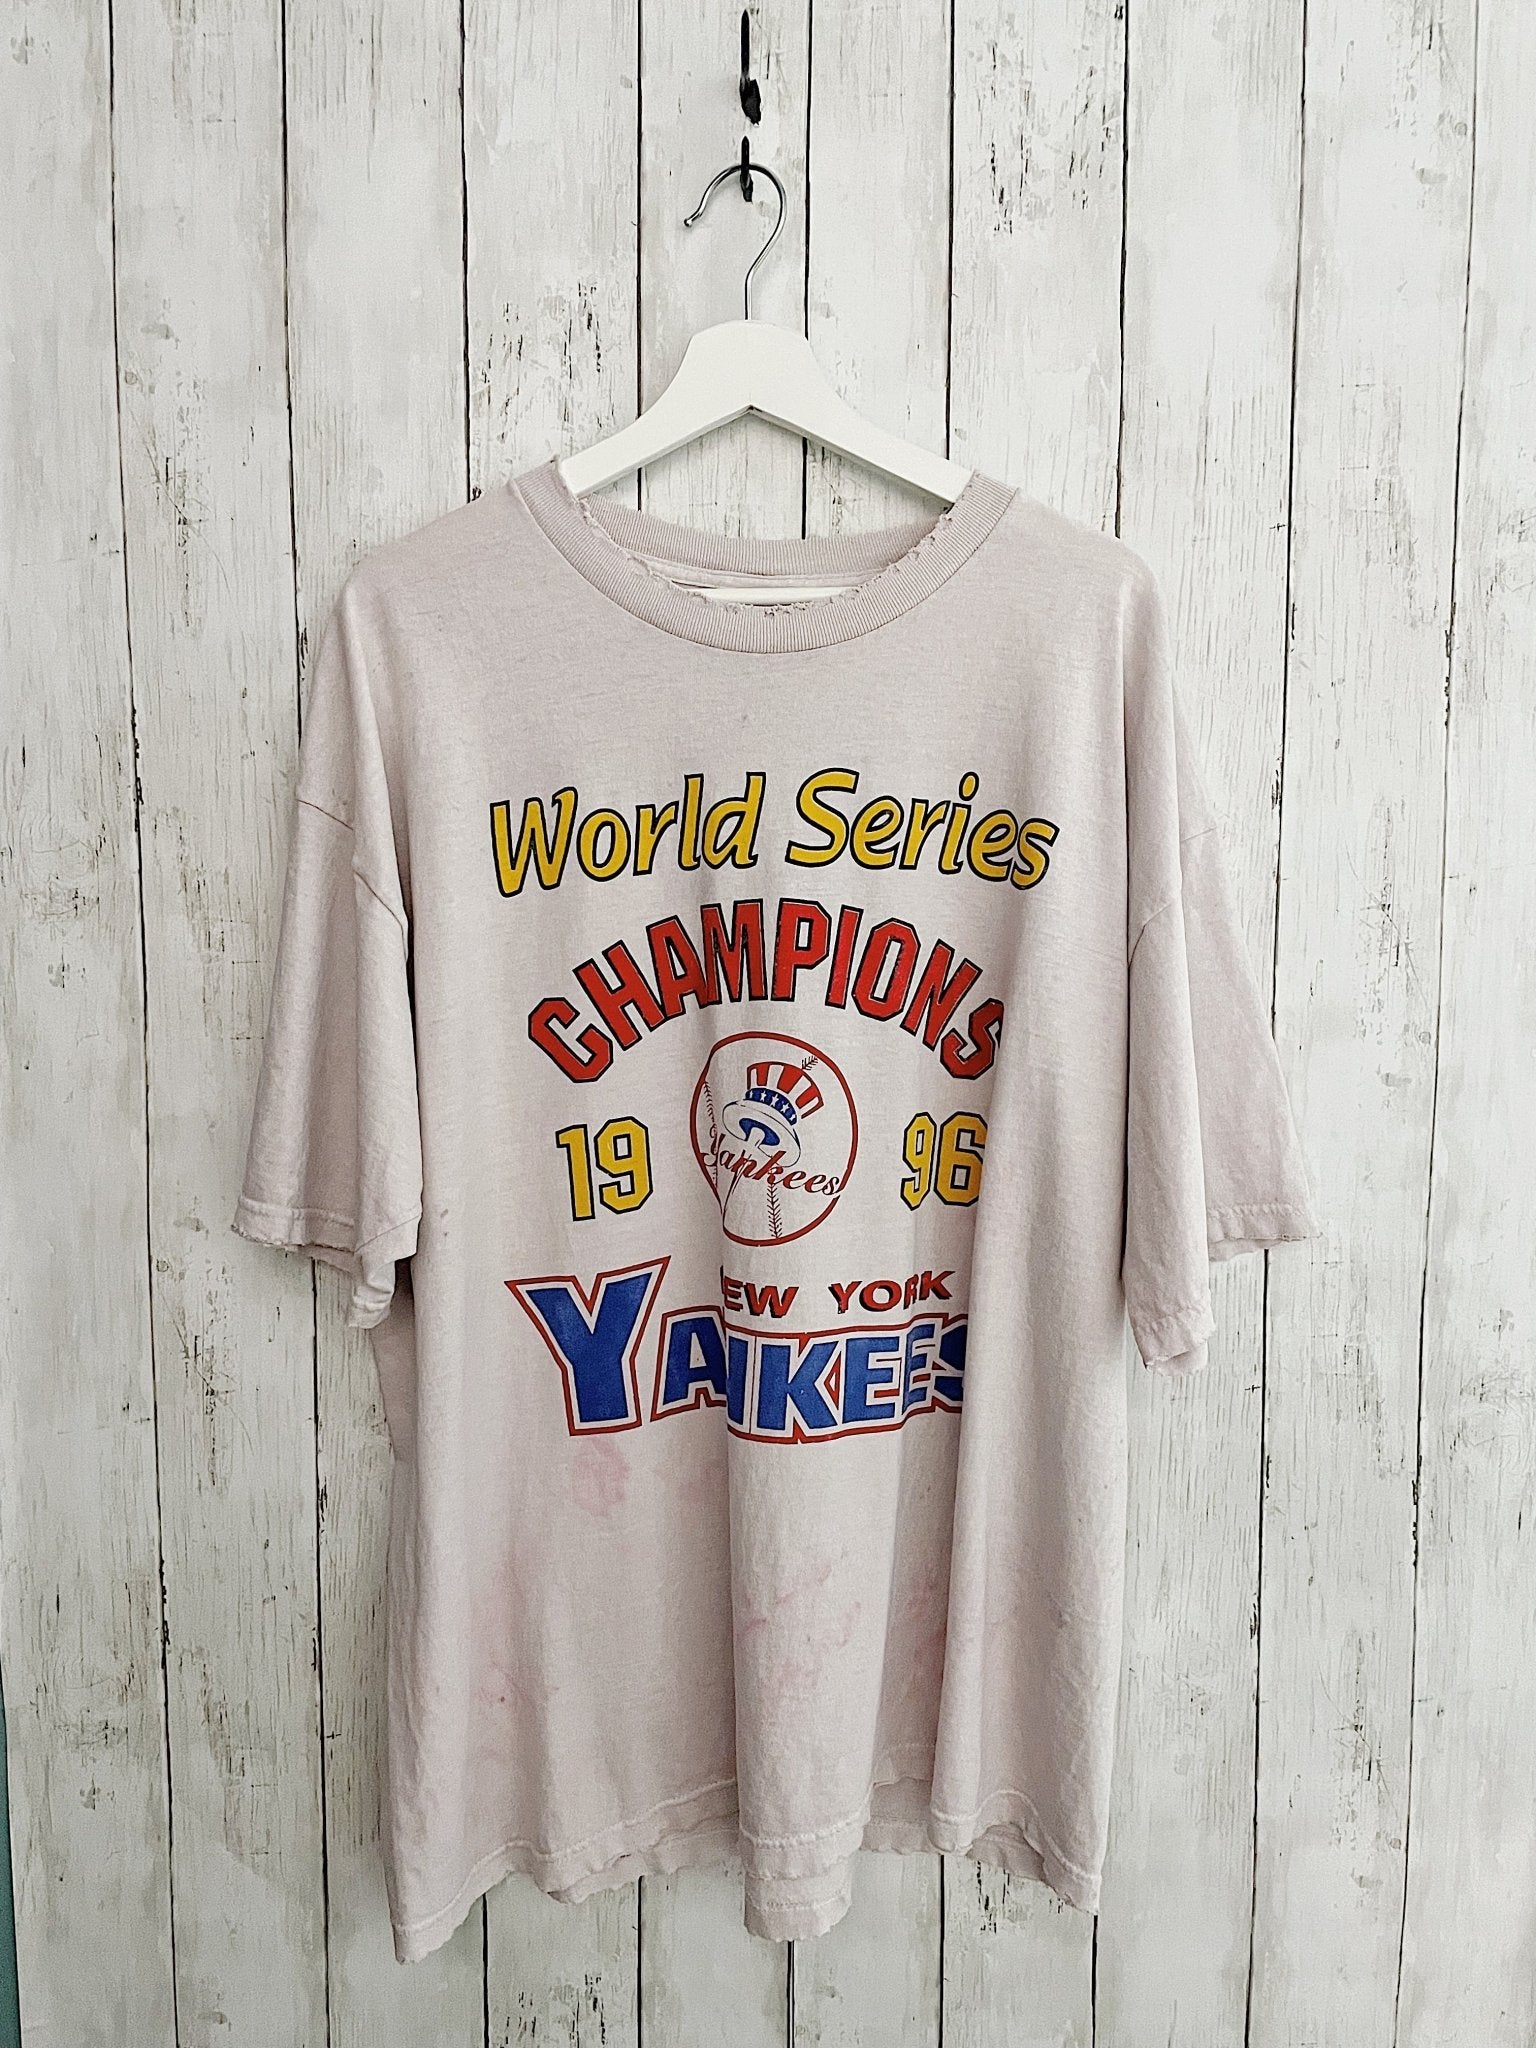 96 NY Yankee T-Shirts ideas  yankees t shirt, ny yankees, yankees